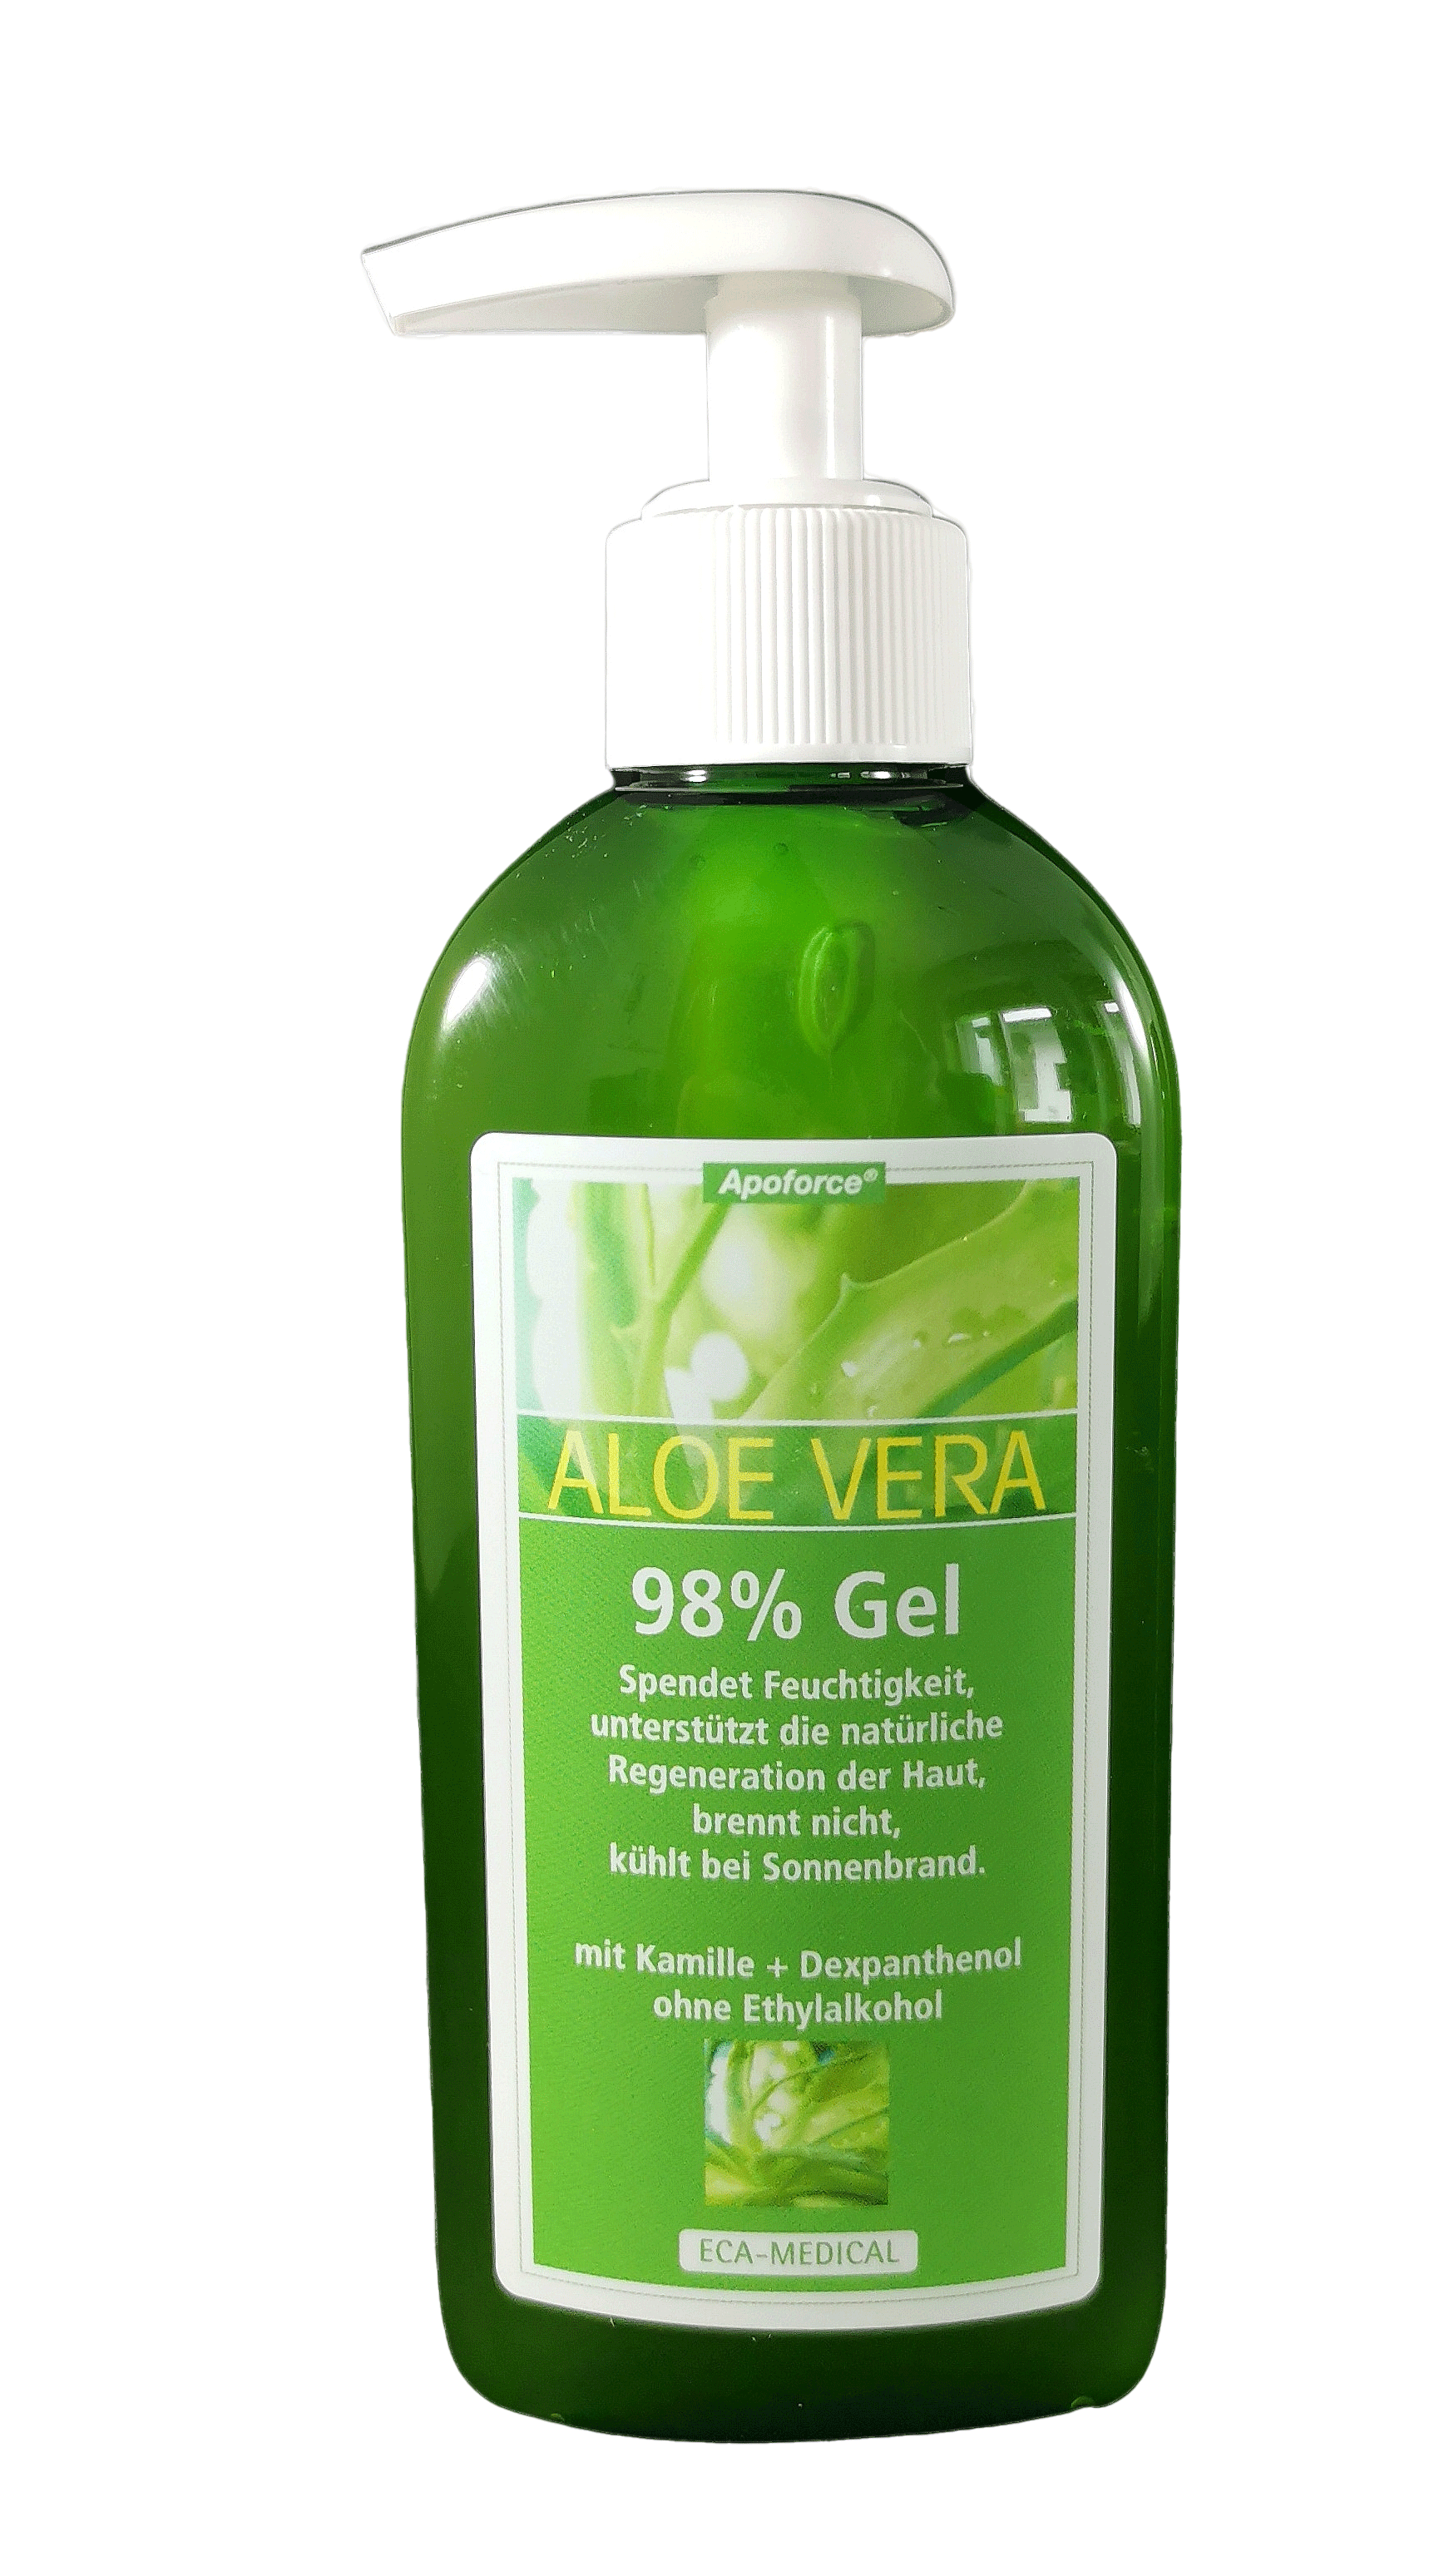 Apoforce® Aloe Vera 98% Gel